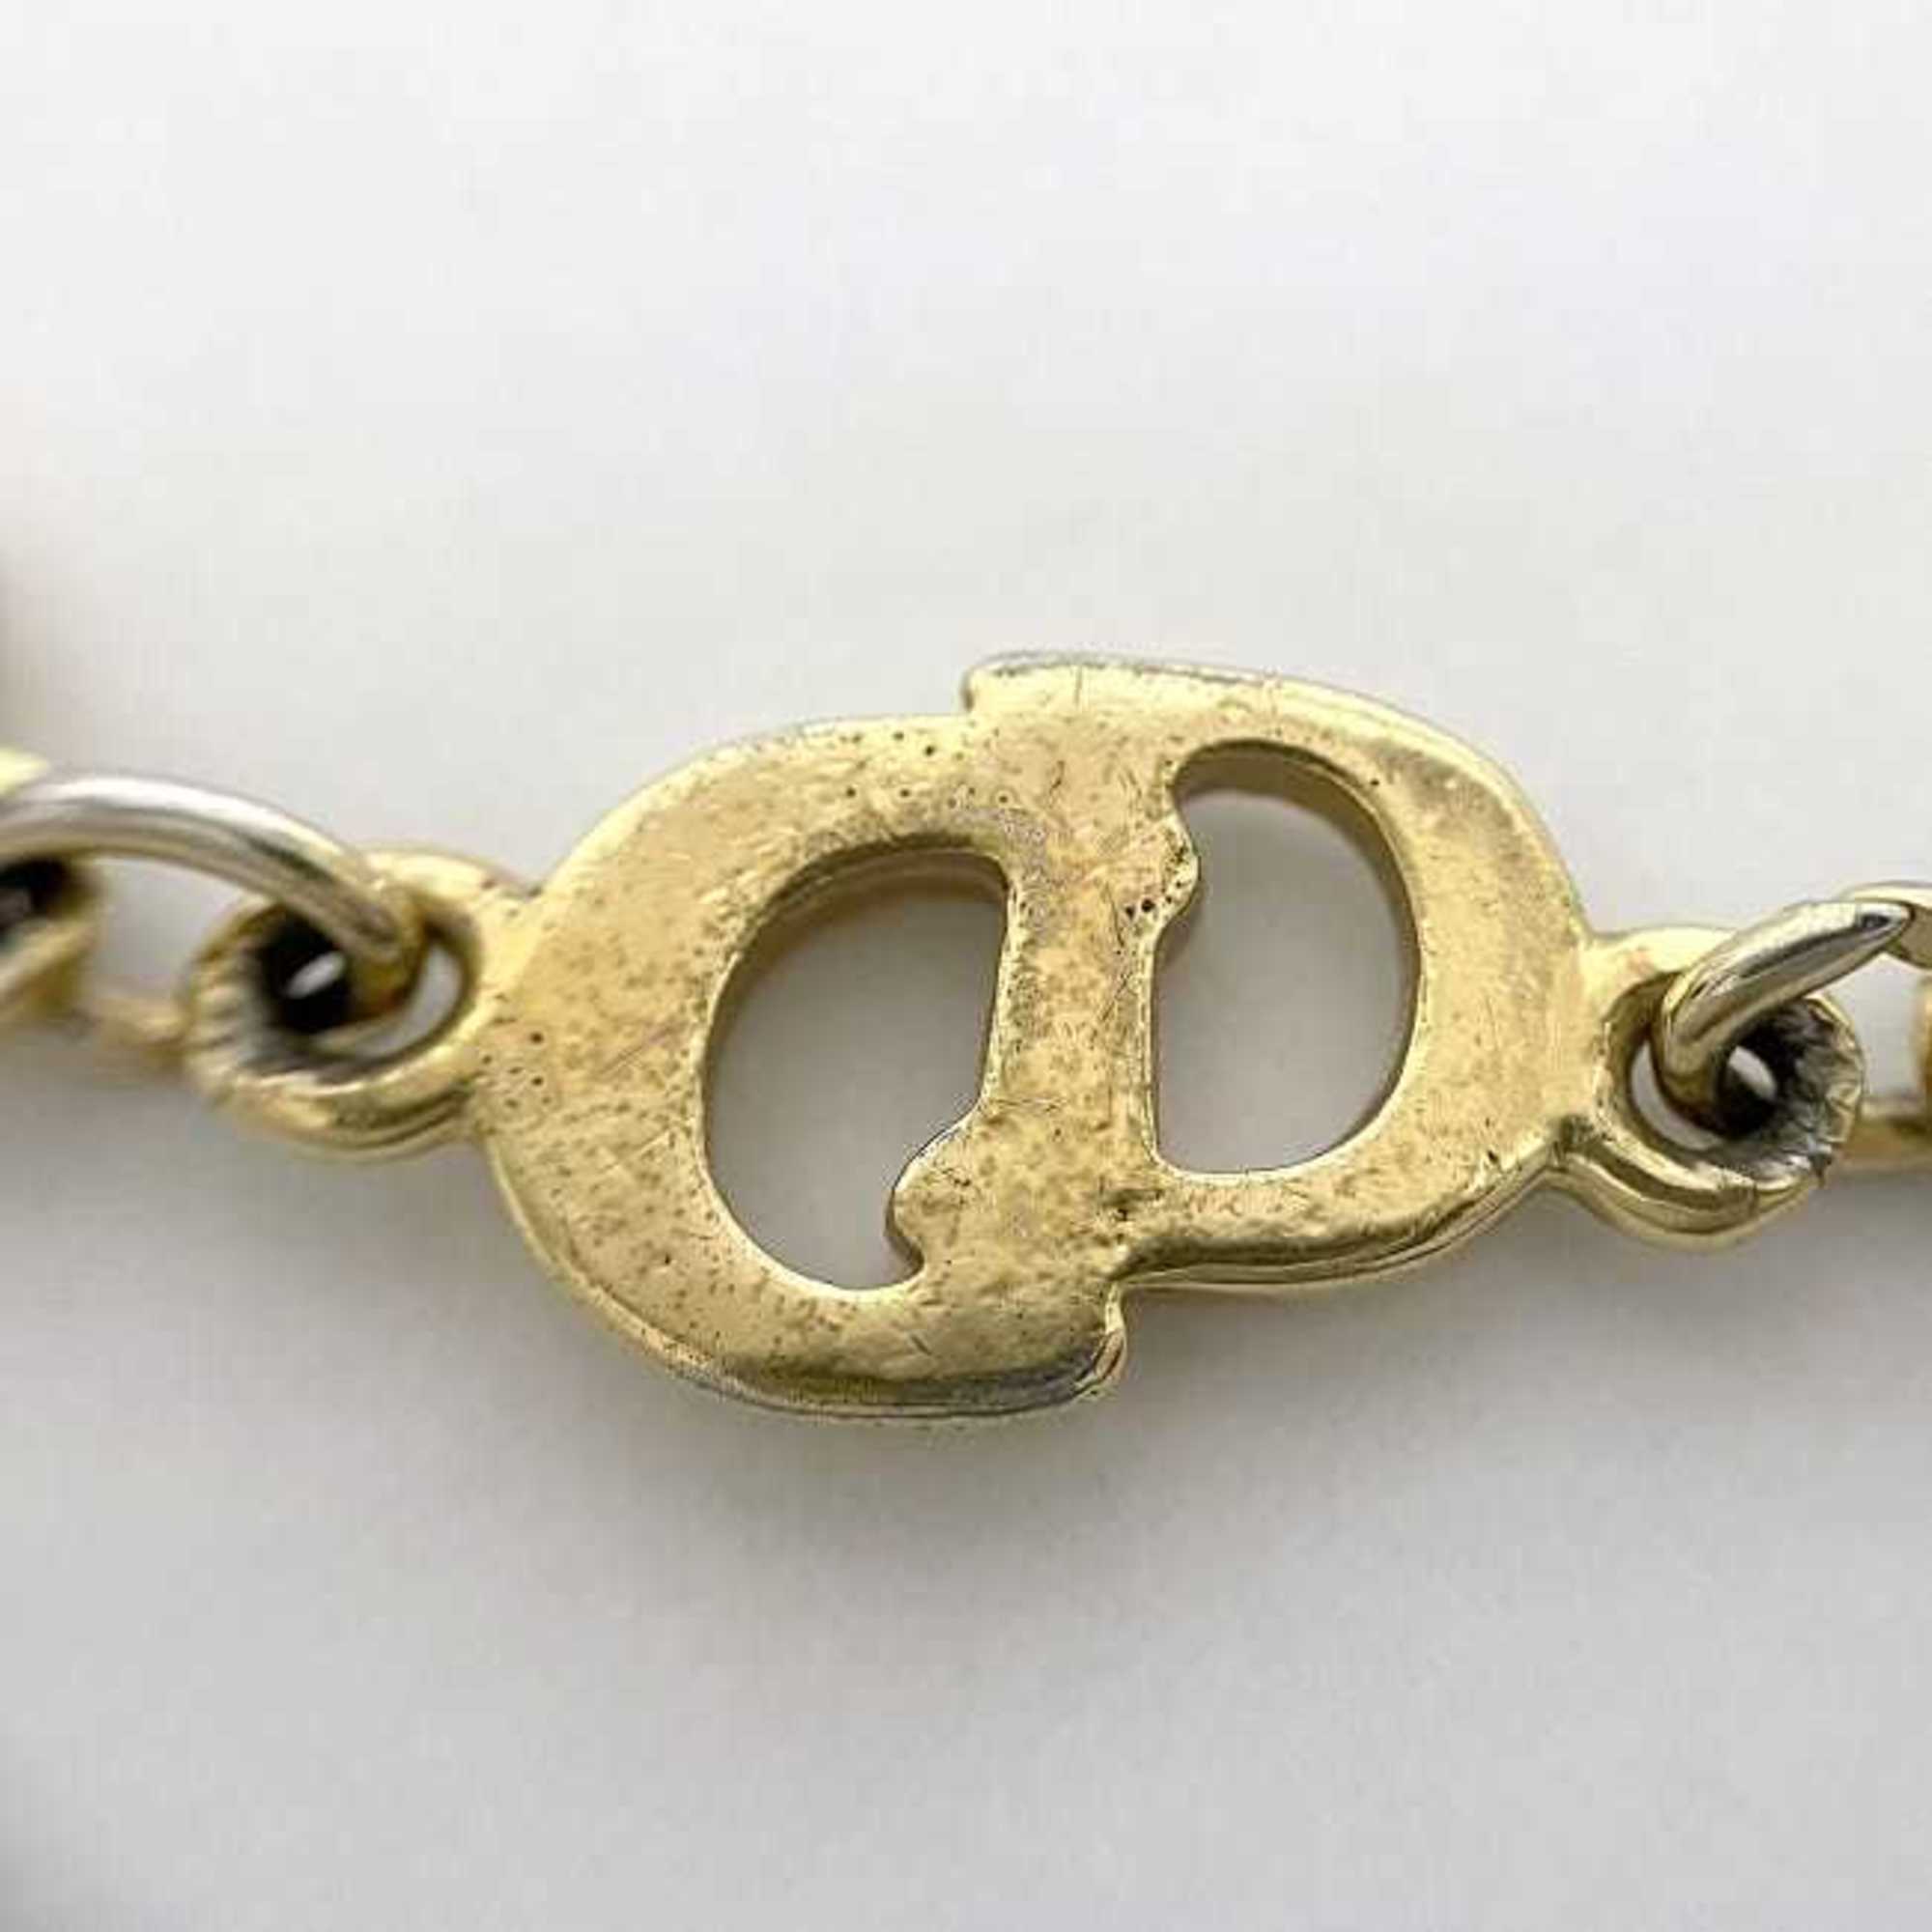 Christian Dior Chain Bracelet Gold ec-20022 GP Women's Retro